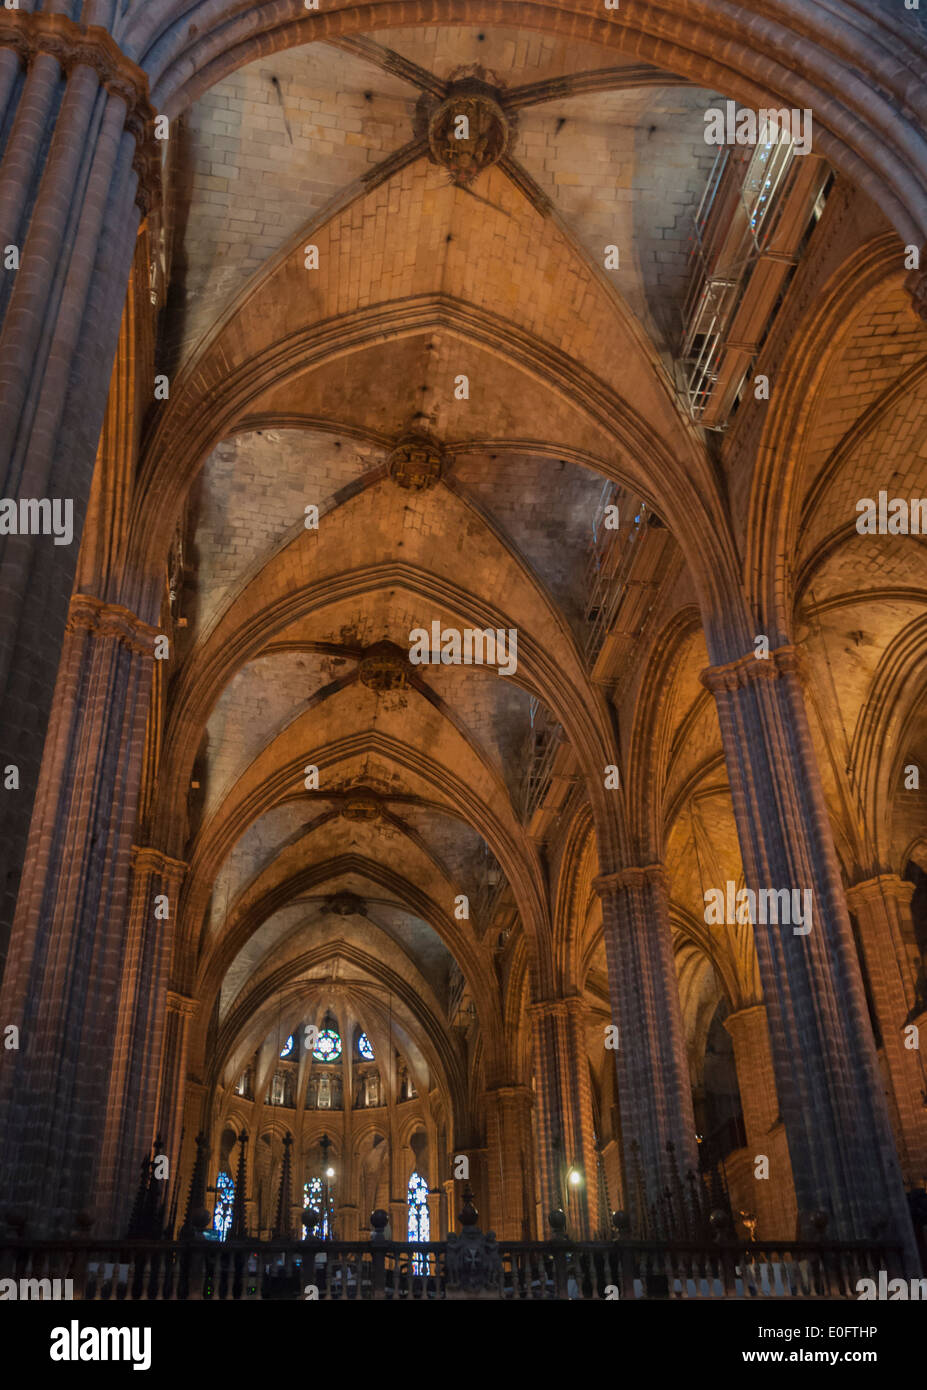 Fan vault ceiling in arcade, Barcelona Cathedral, Spain. Barcelona Cathedral is situated in the Gothic quarters. Stock Photo